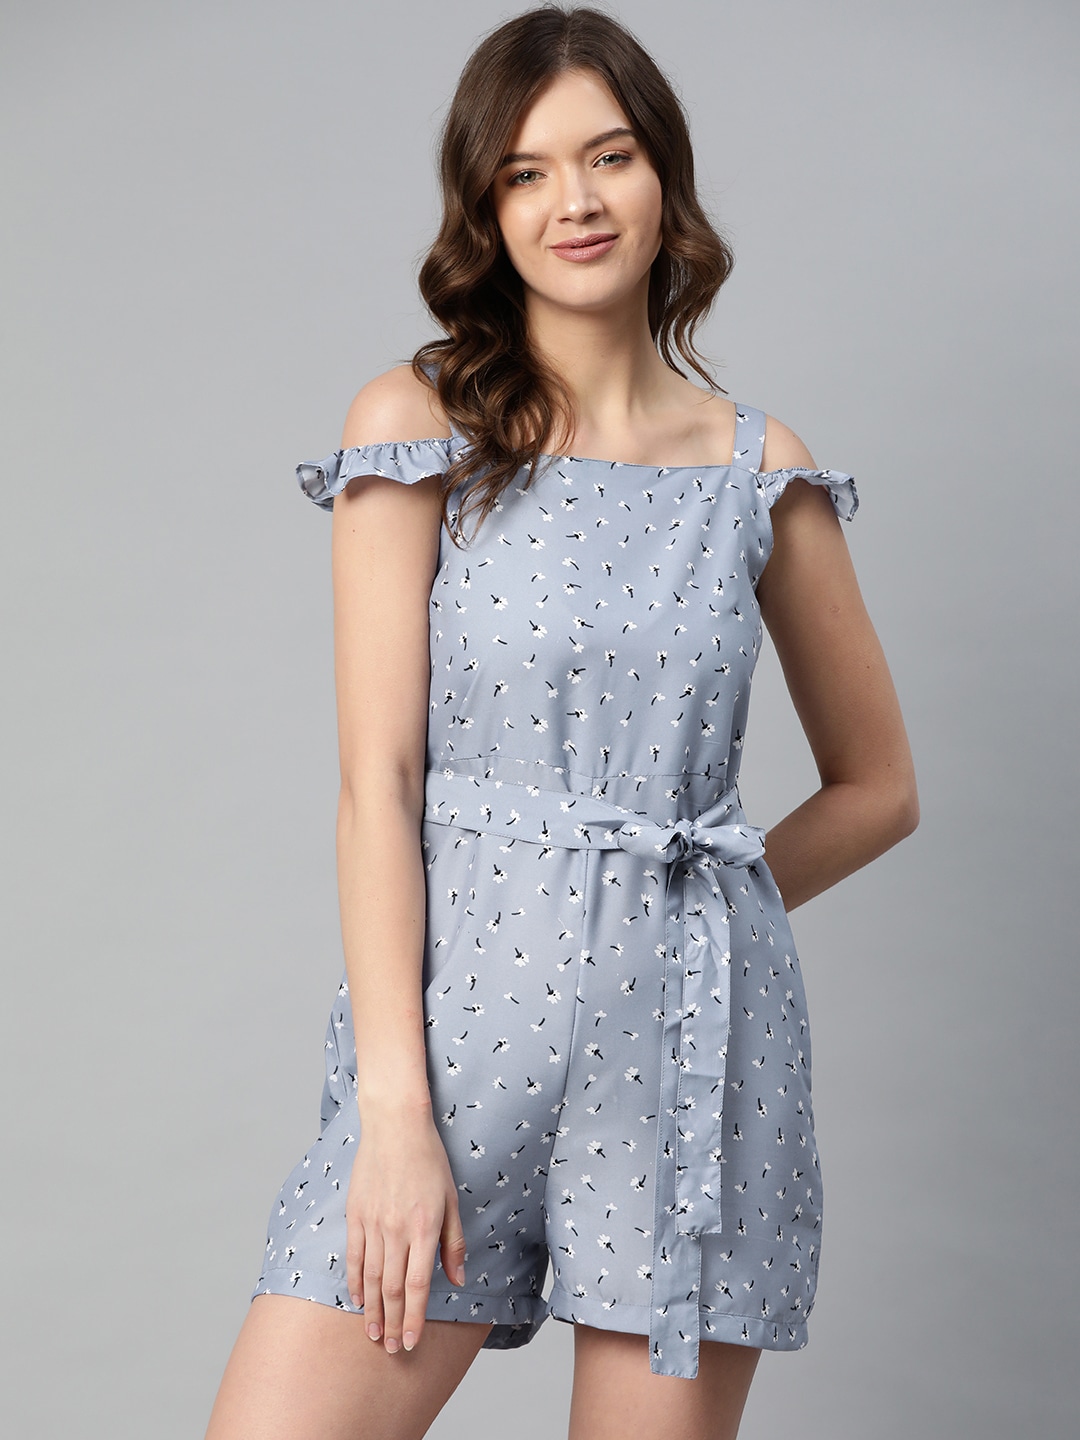 Clothing Jumpsuit | SIRIKIT Grey & White Floral Printed Playsuit With Waist Tie-Ups - RK98938